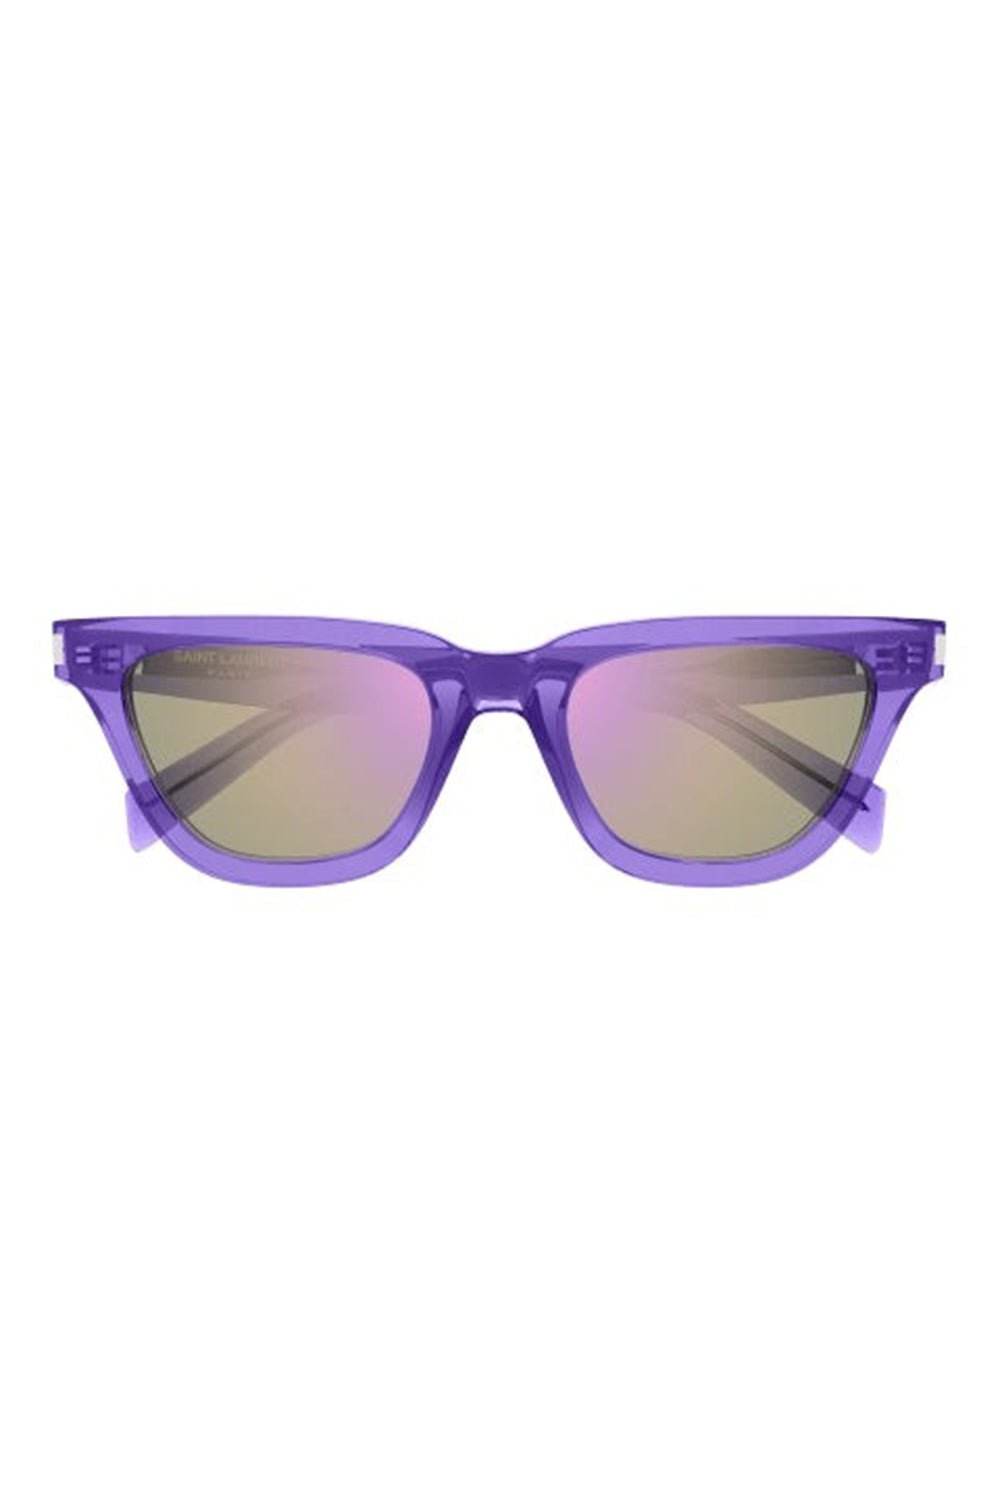 SAINT LAURENT-Sulpice Sunglasses - Violet Pink-VIOLET/PINK